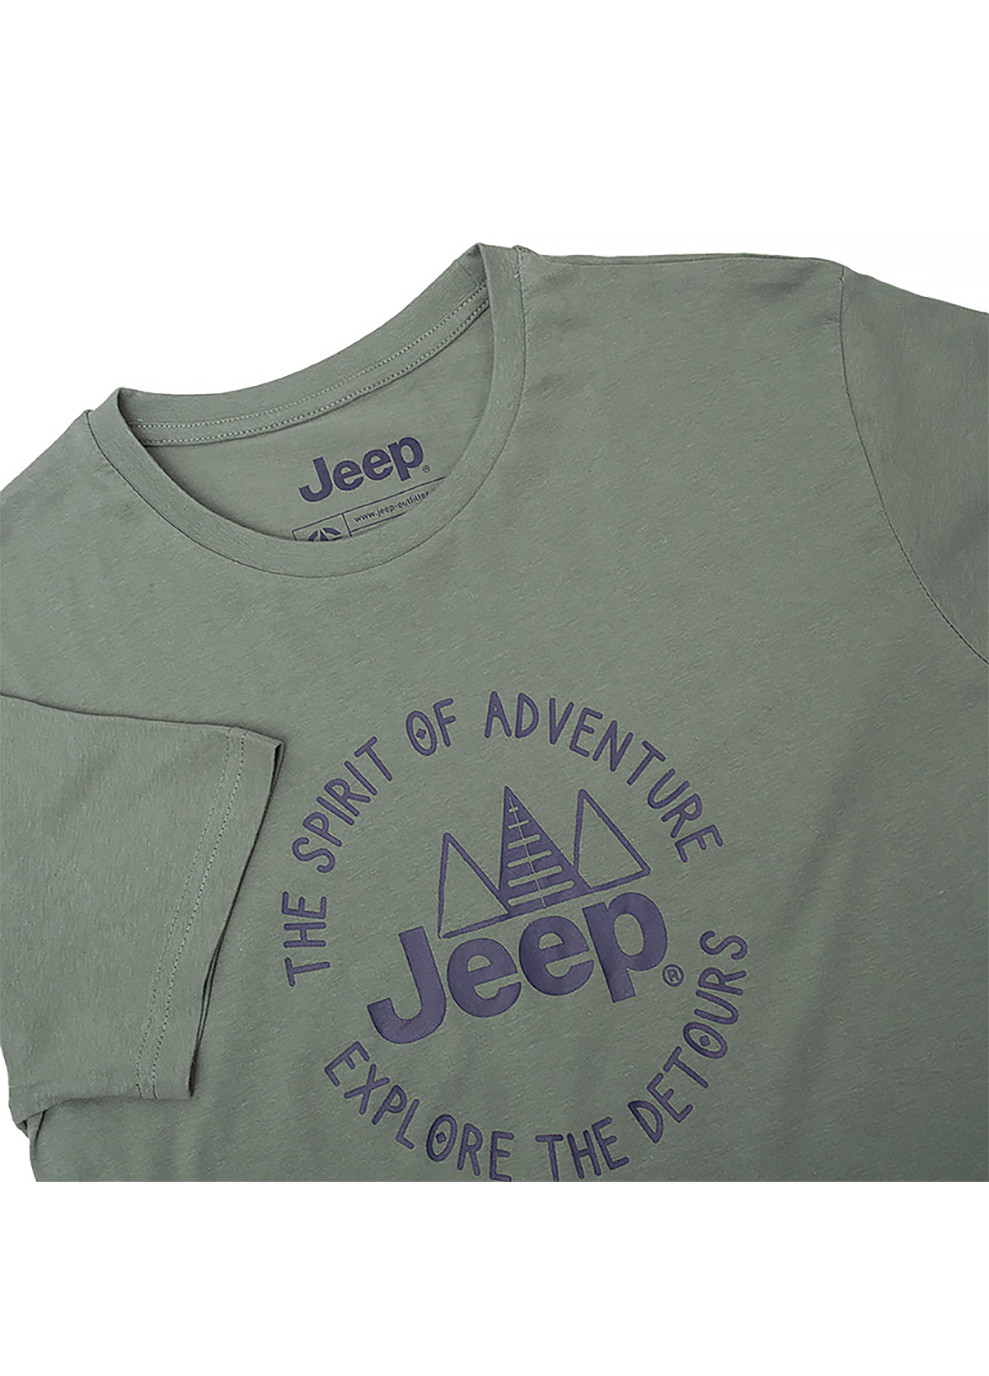 Хаки (оливковая) мужская футболка t-shirt the spirit of adventure хаки l (o102587-e847 l) Jeep